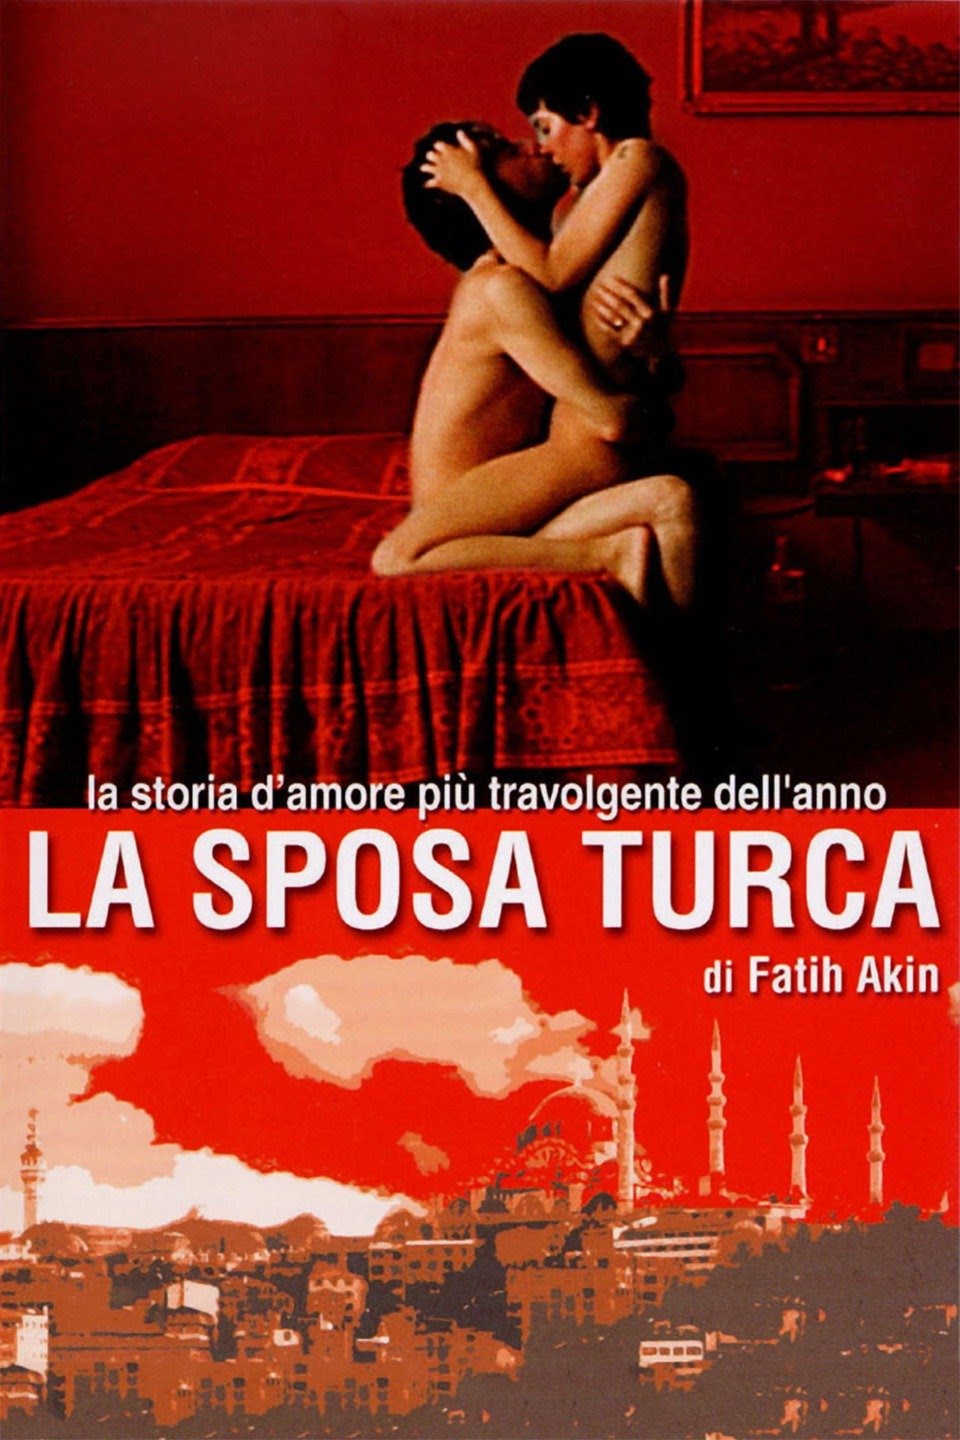 La sposa turca [HD] (2004)